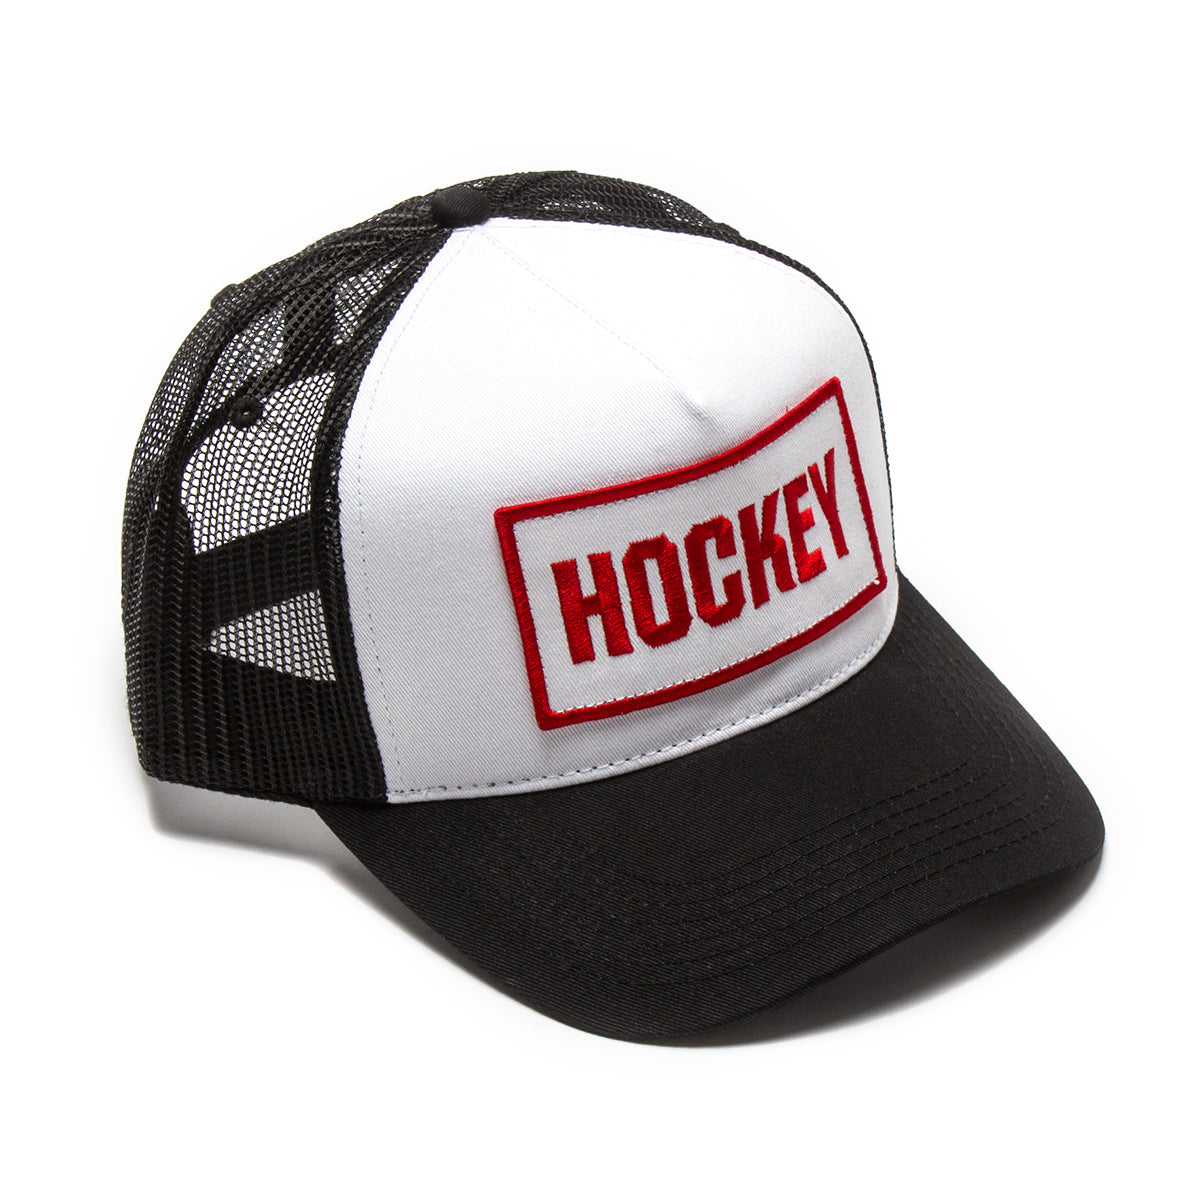 Hockey Truckstop Hat Color : Black / White